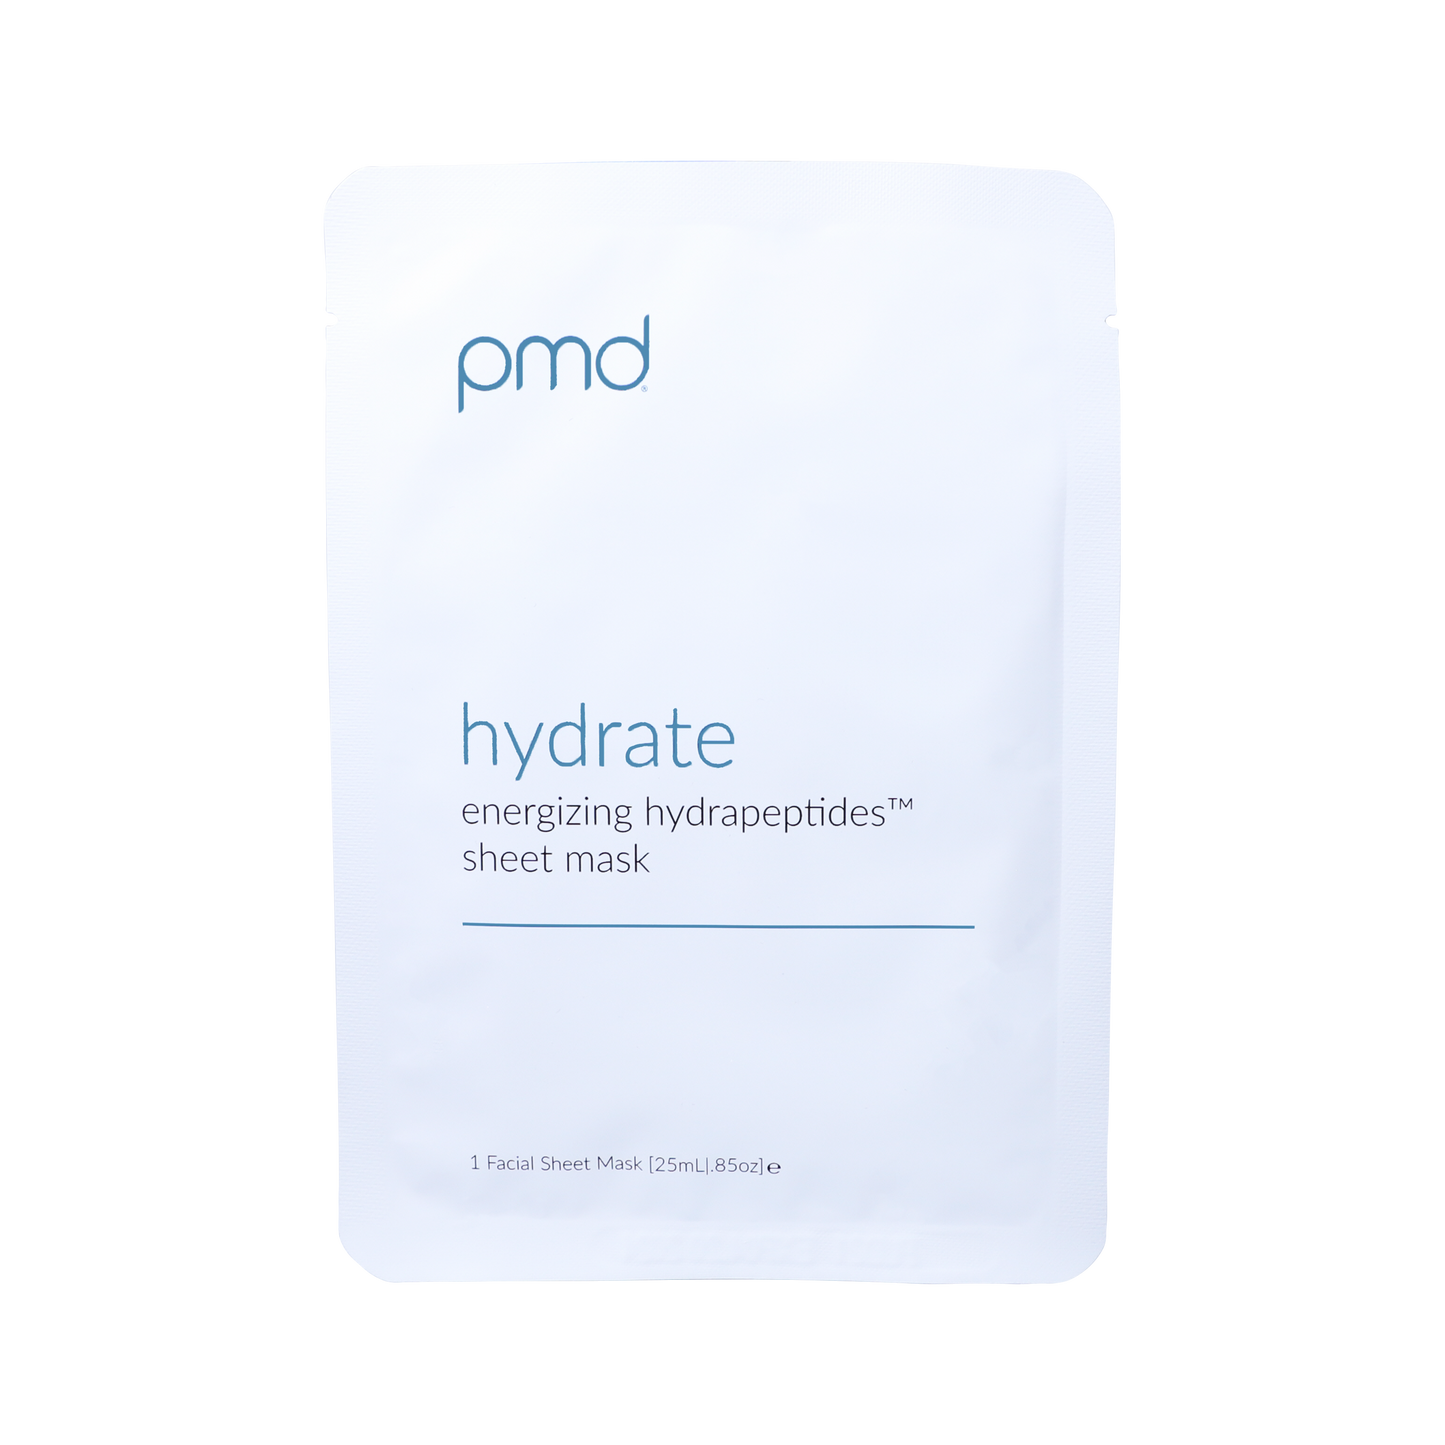 1050-Hydrate?Hydrate Energizing HydratingPeptides